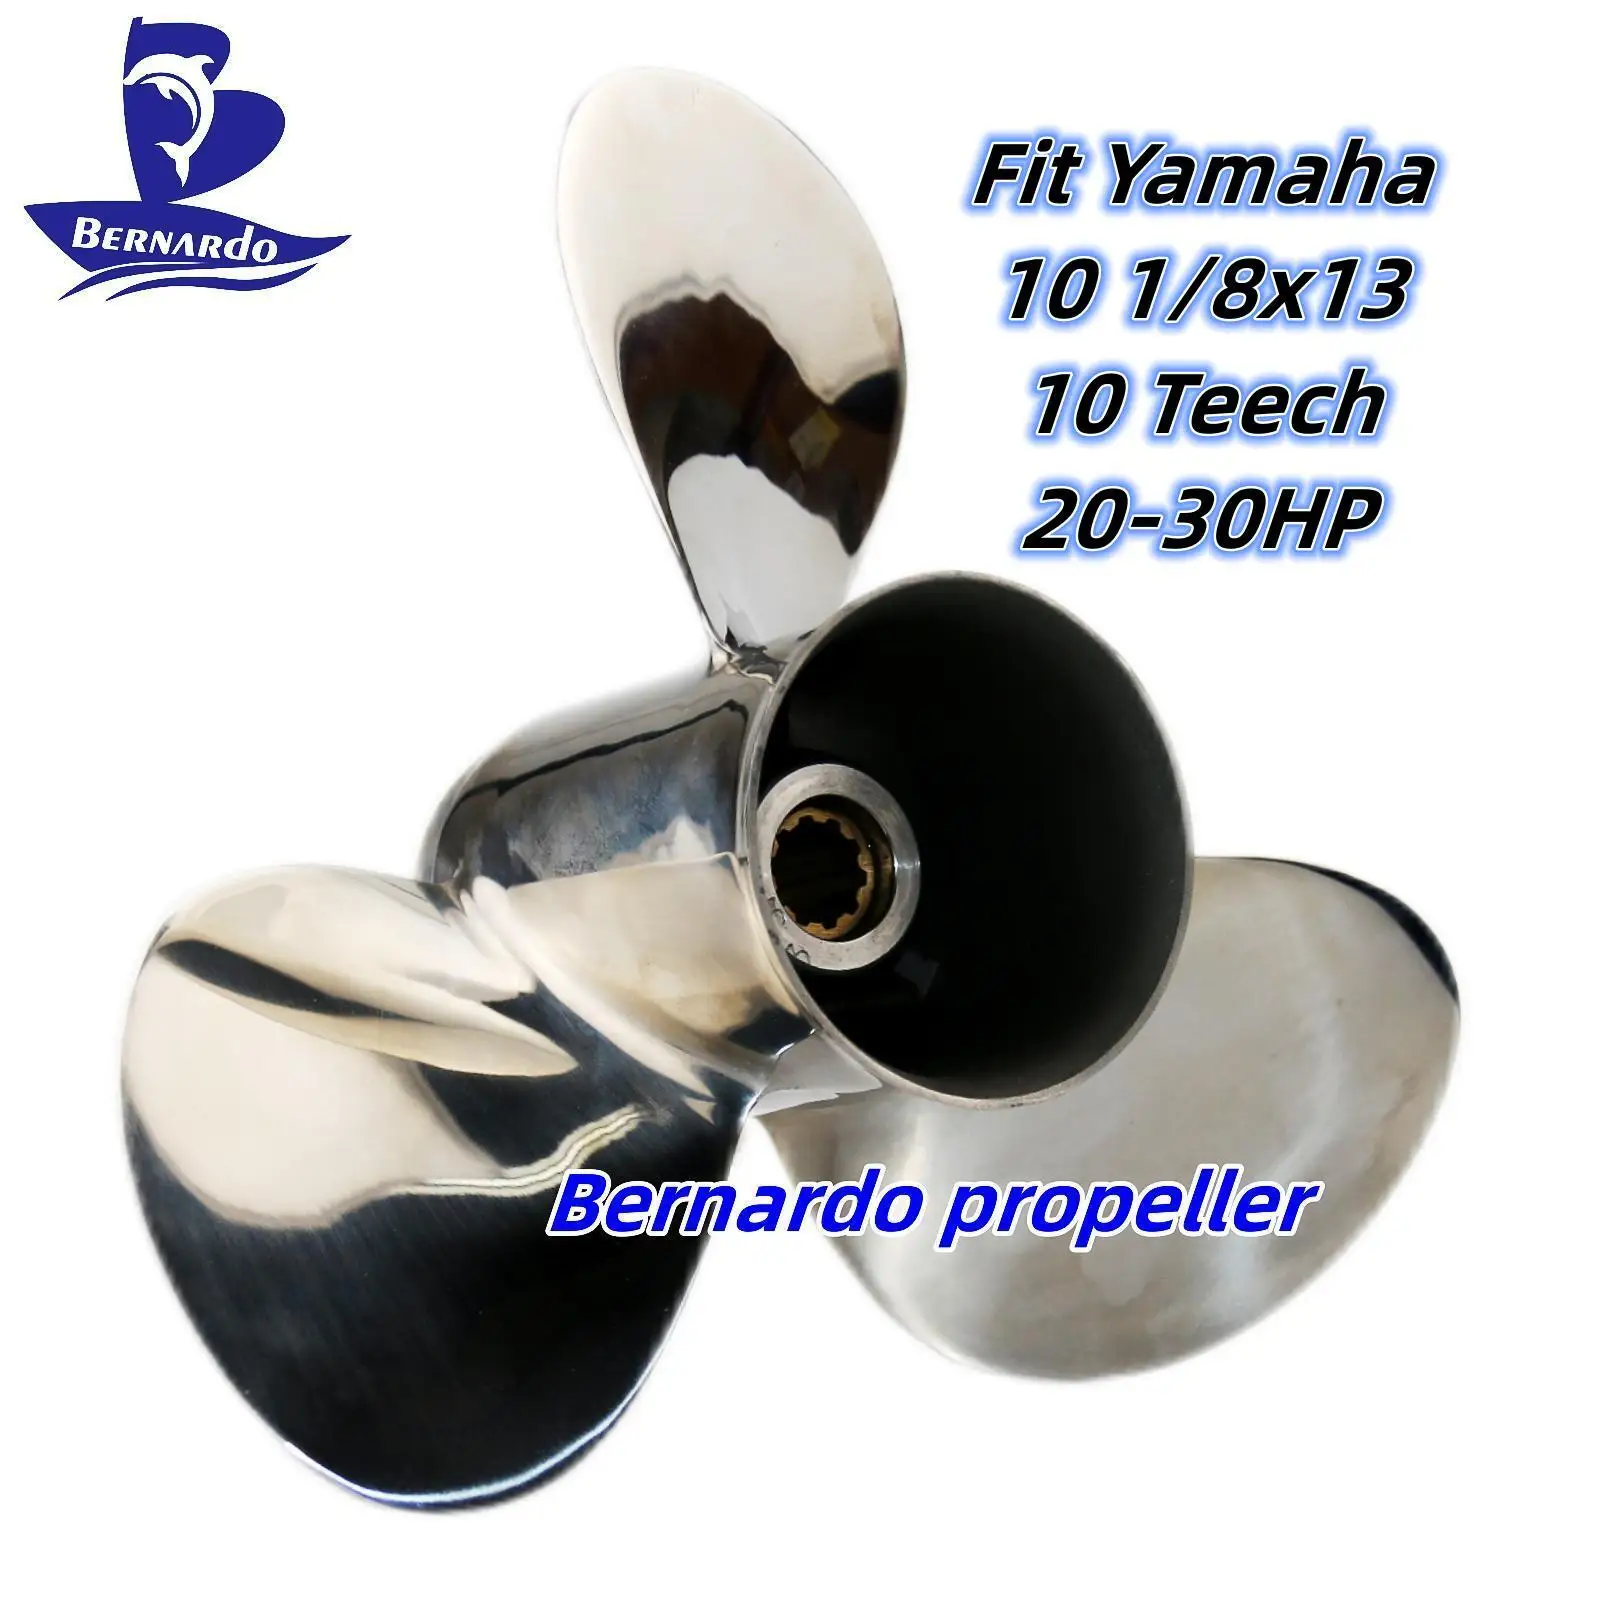 Bernardo Boat Propeller 10 1/8x13 Fit Yamaha Outboard Engine 20 25 30 HP Motor Stainless Steel Screw 3 Blade 10 Tooth Spline